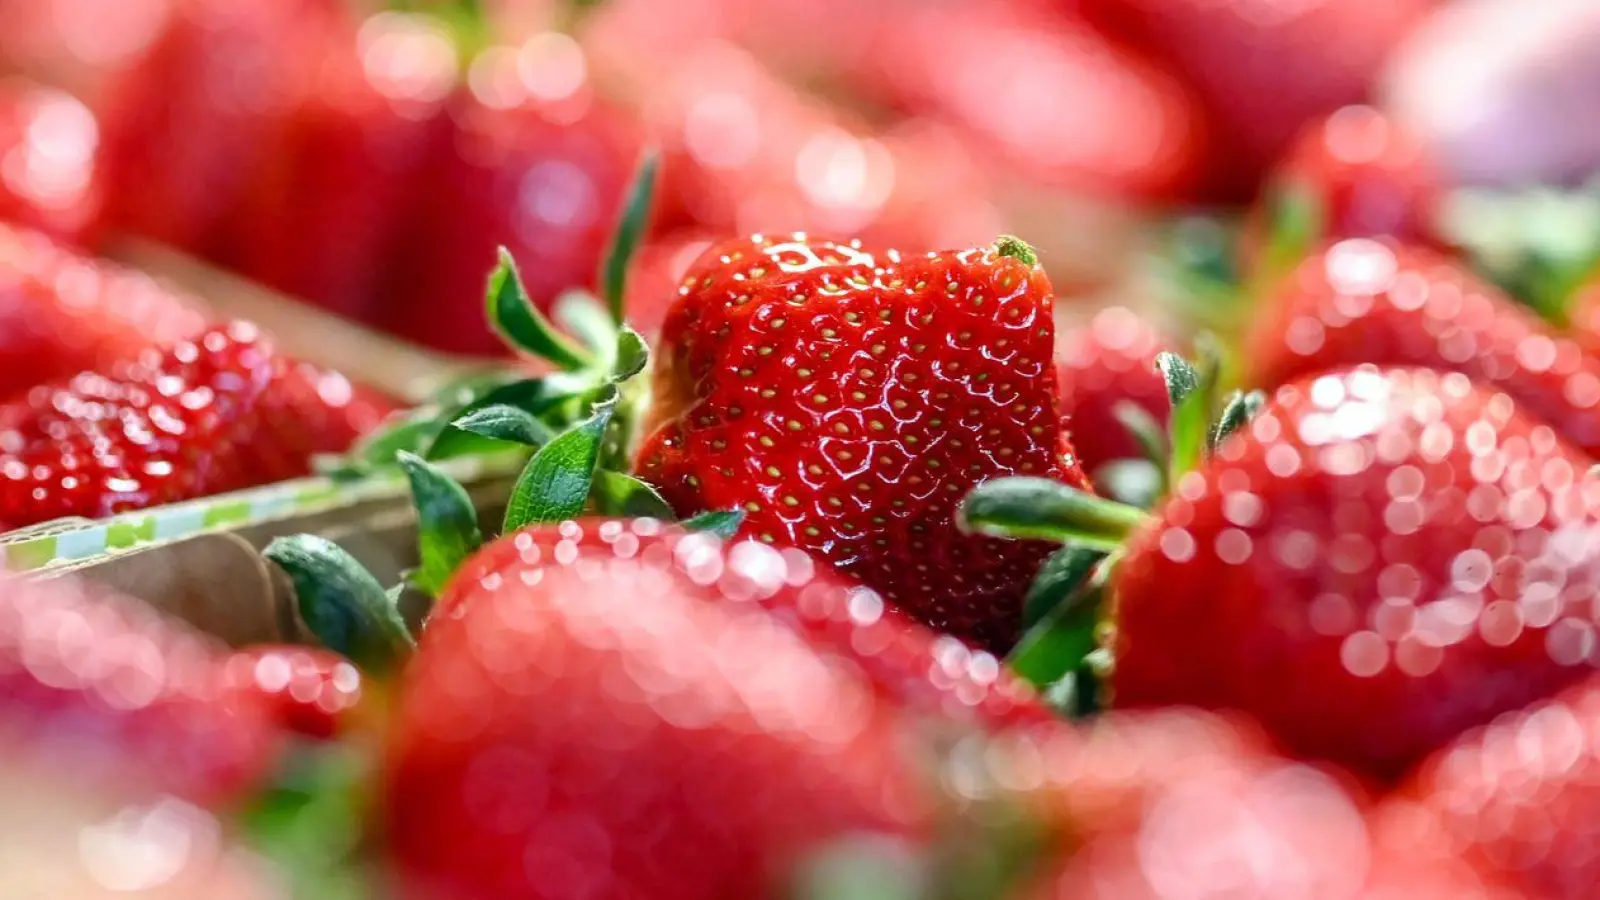 Beim Beerenhof Ell werden frisch geerntete Erdbeeren gezeigt. (Foto: Uli Deck/dpa)